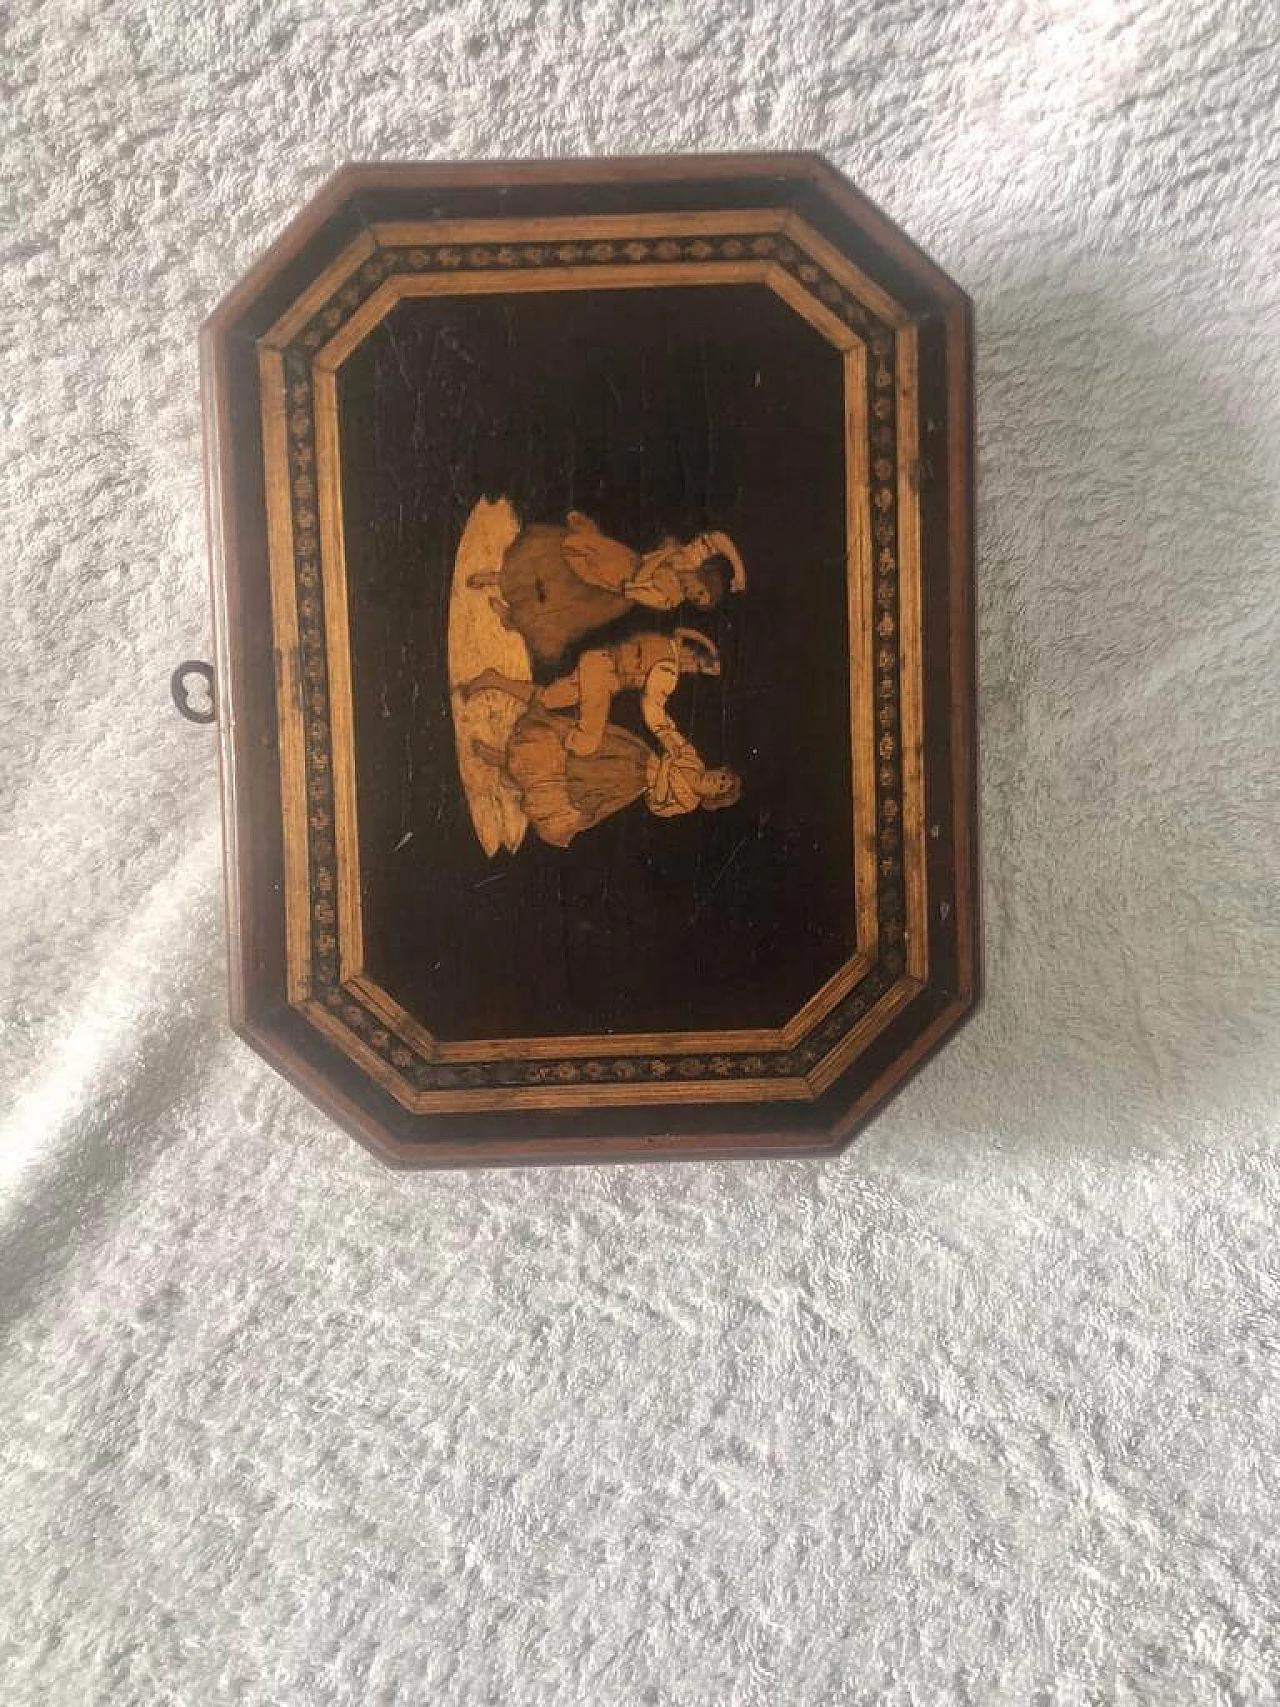 Sorrentine jewelry box in inlaid wood, 19th century 1400594